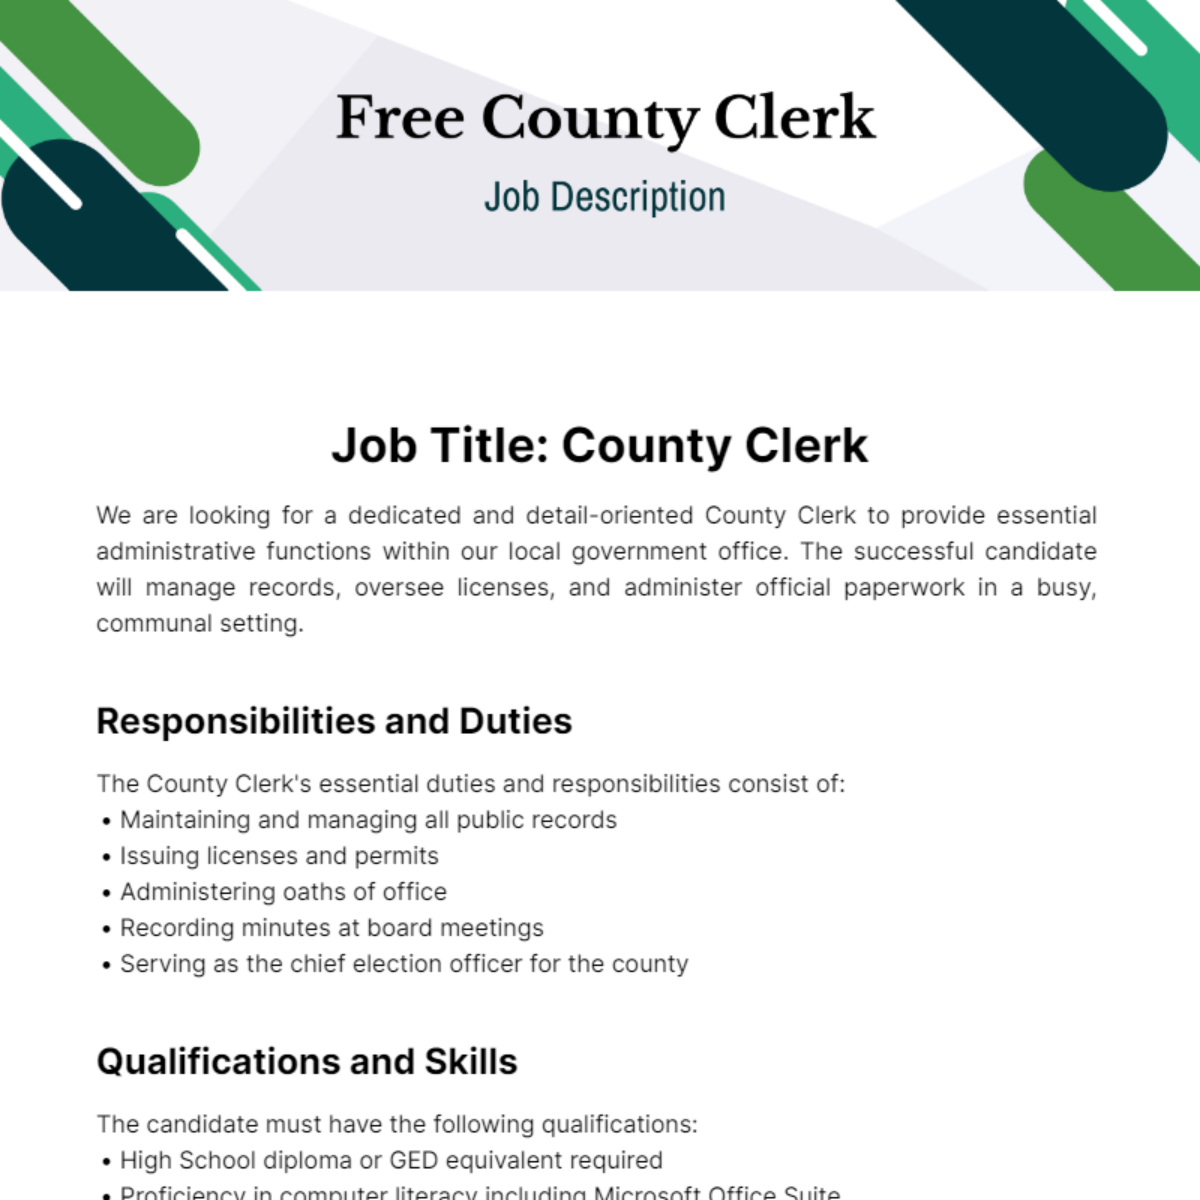 Free County Clerk Job Description Template